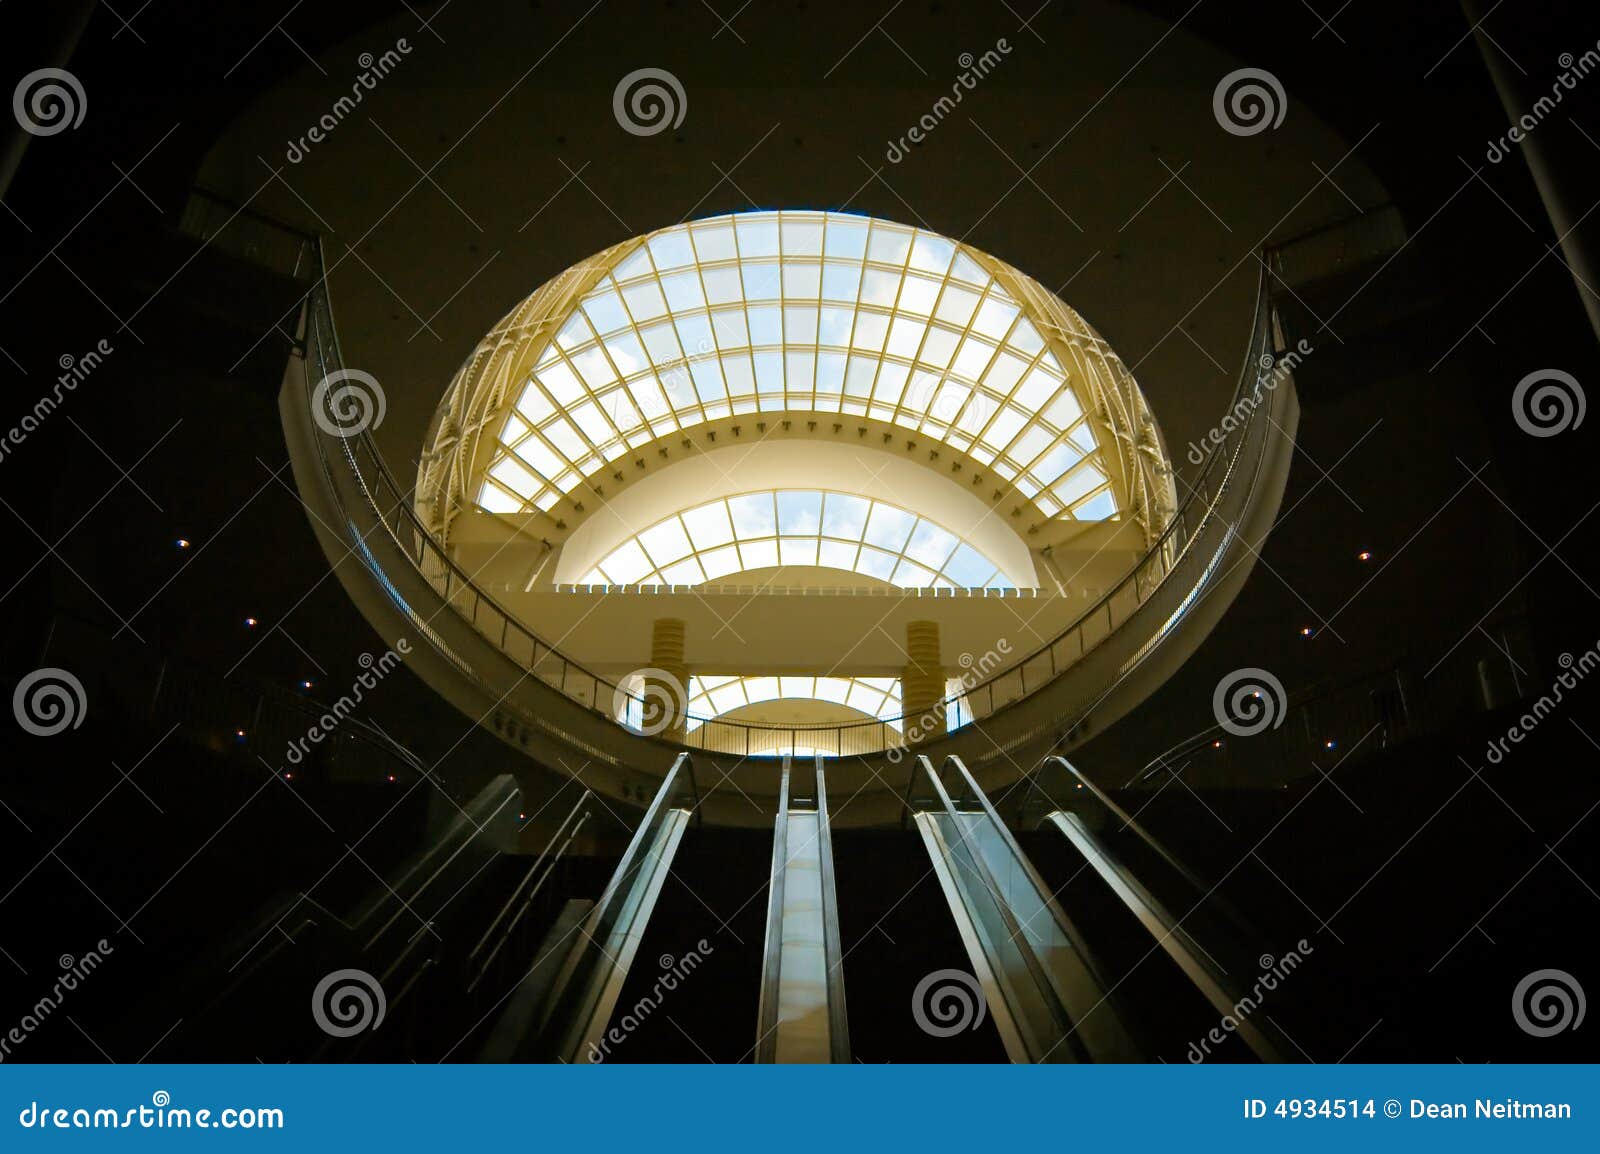 convention center escalators